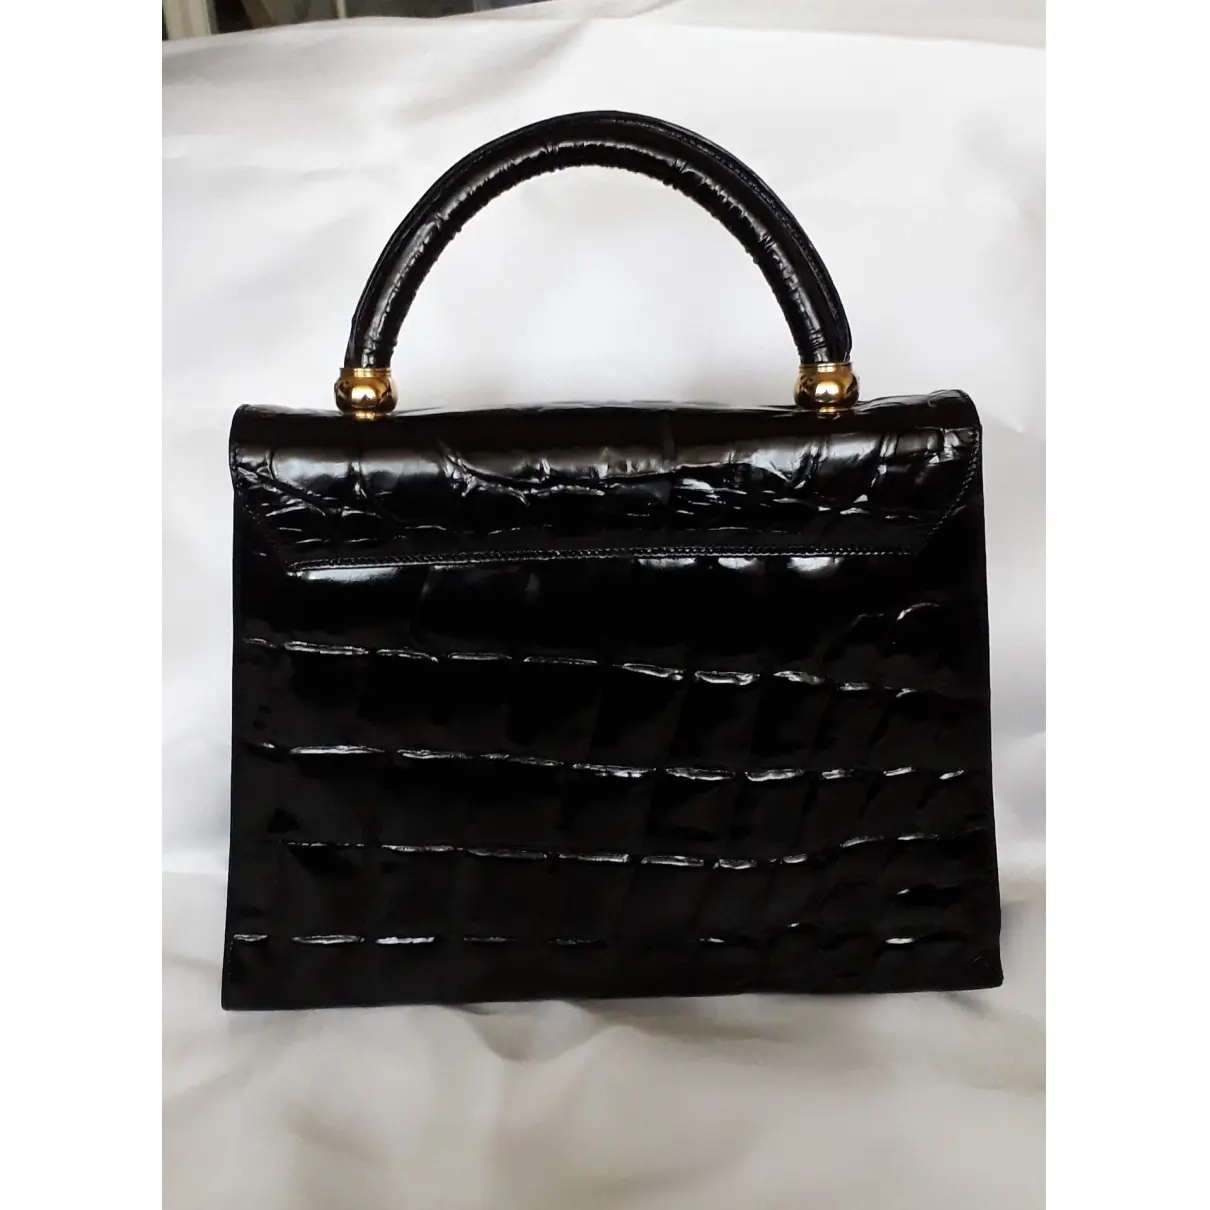 Buy Vogue Leather handbag online